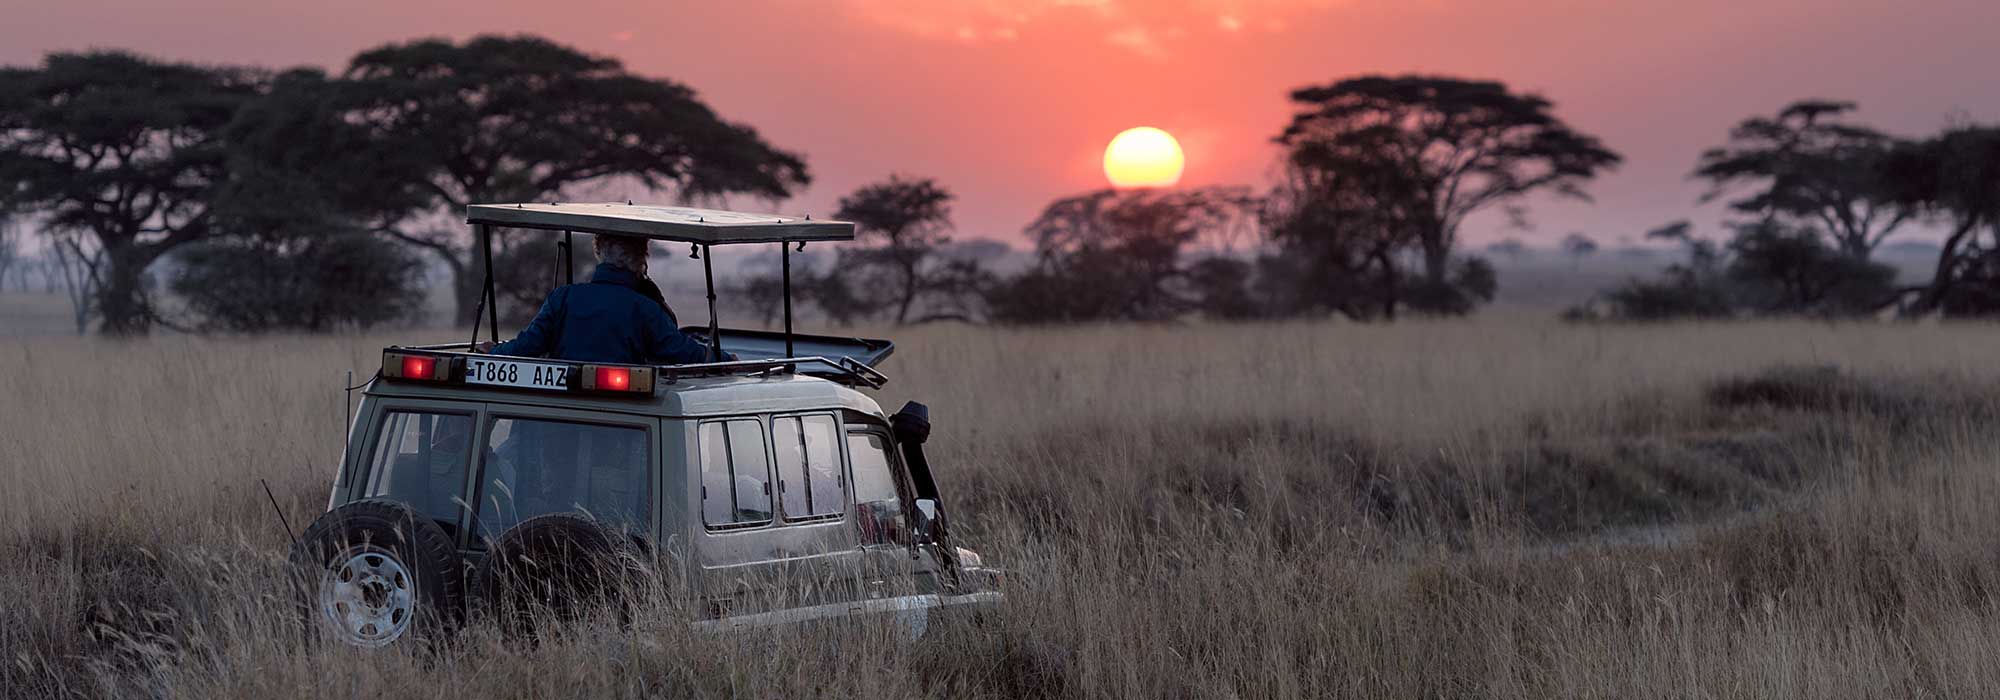 safari jeep in africa